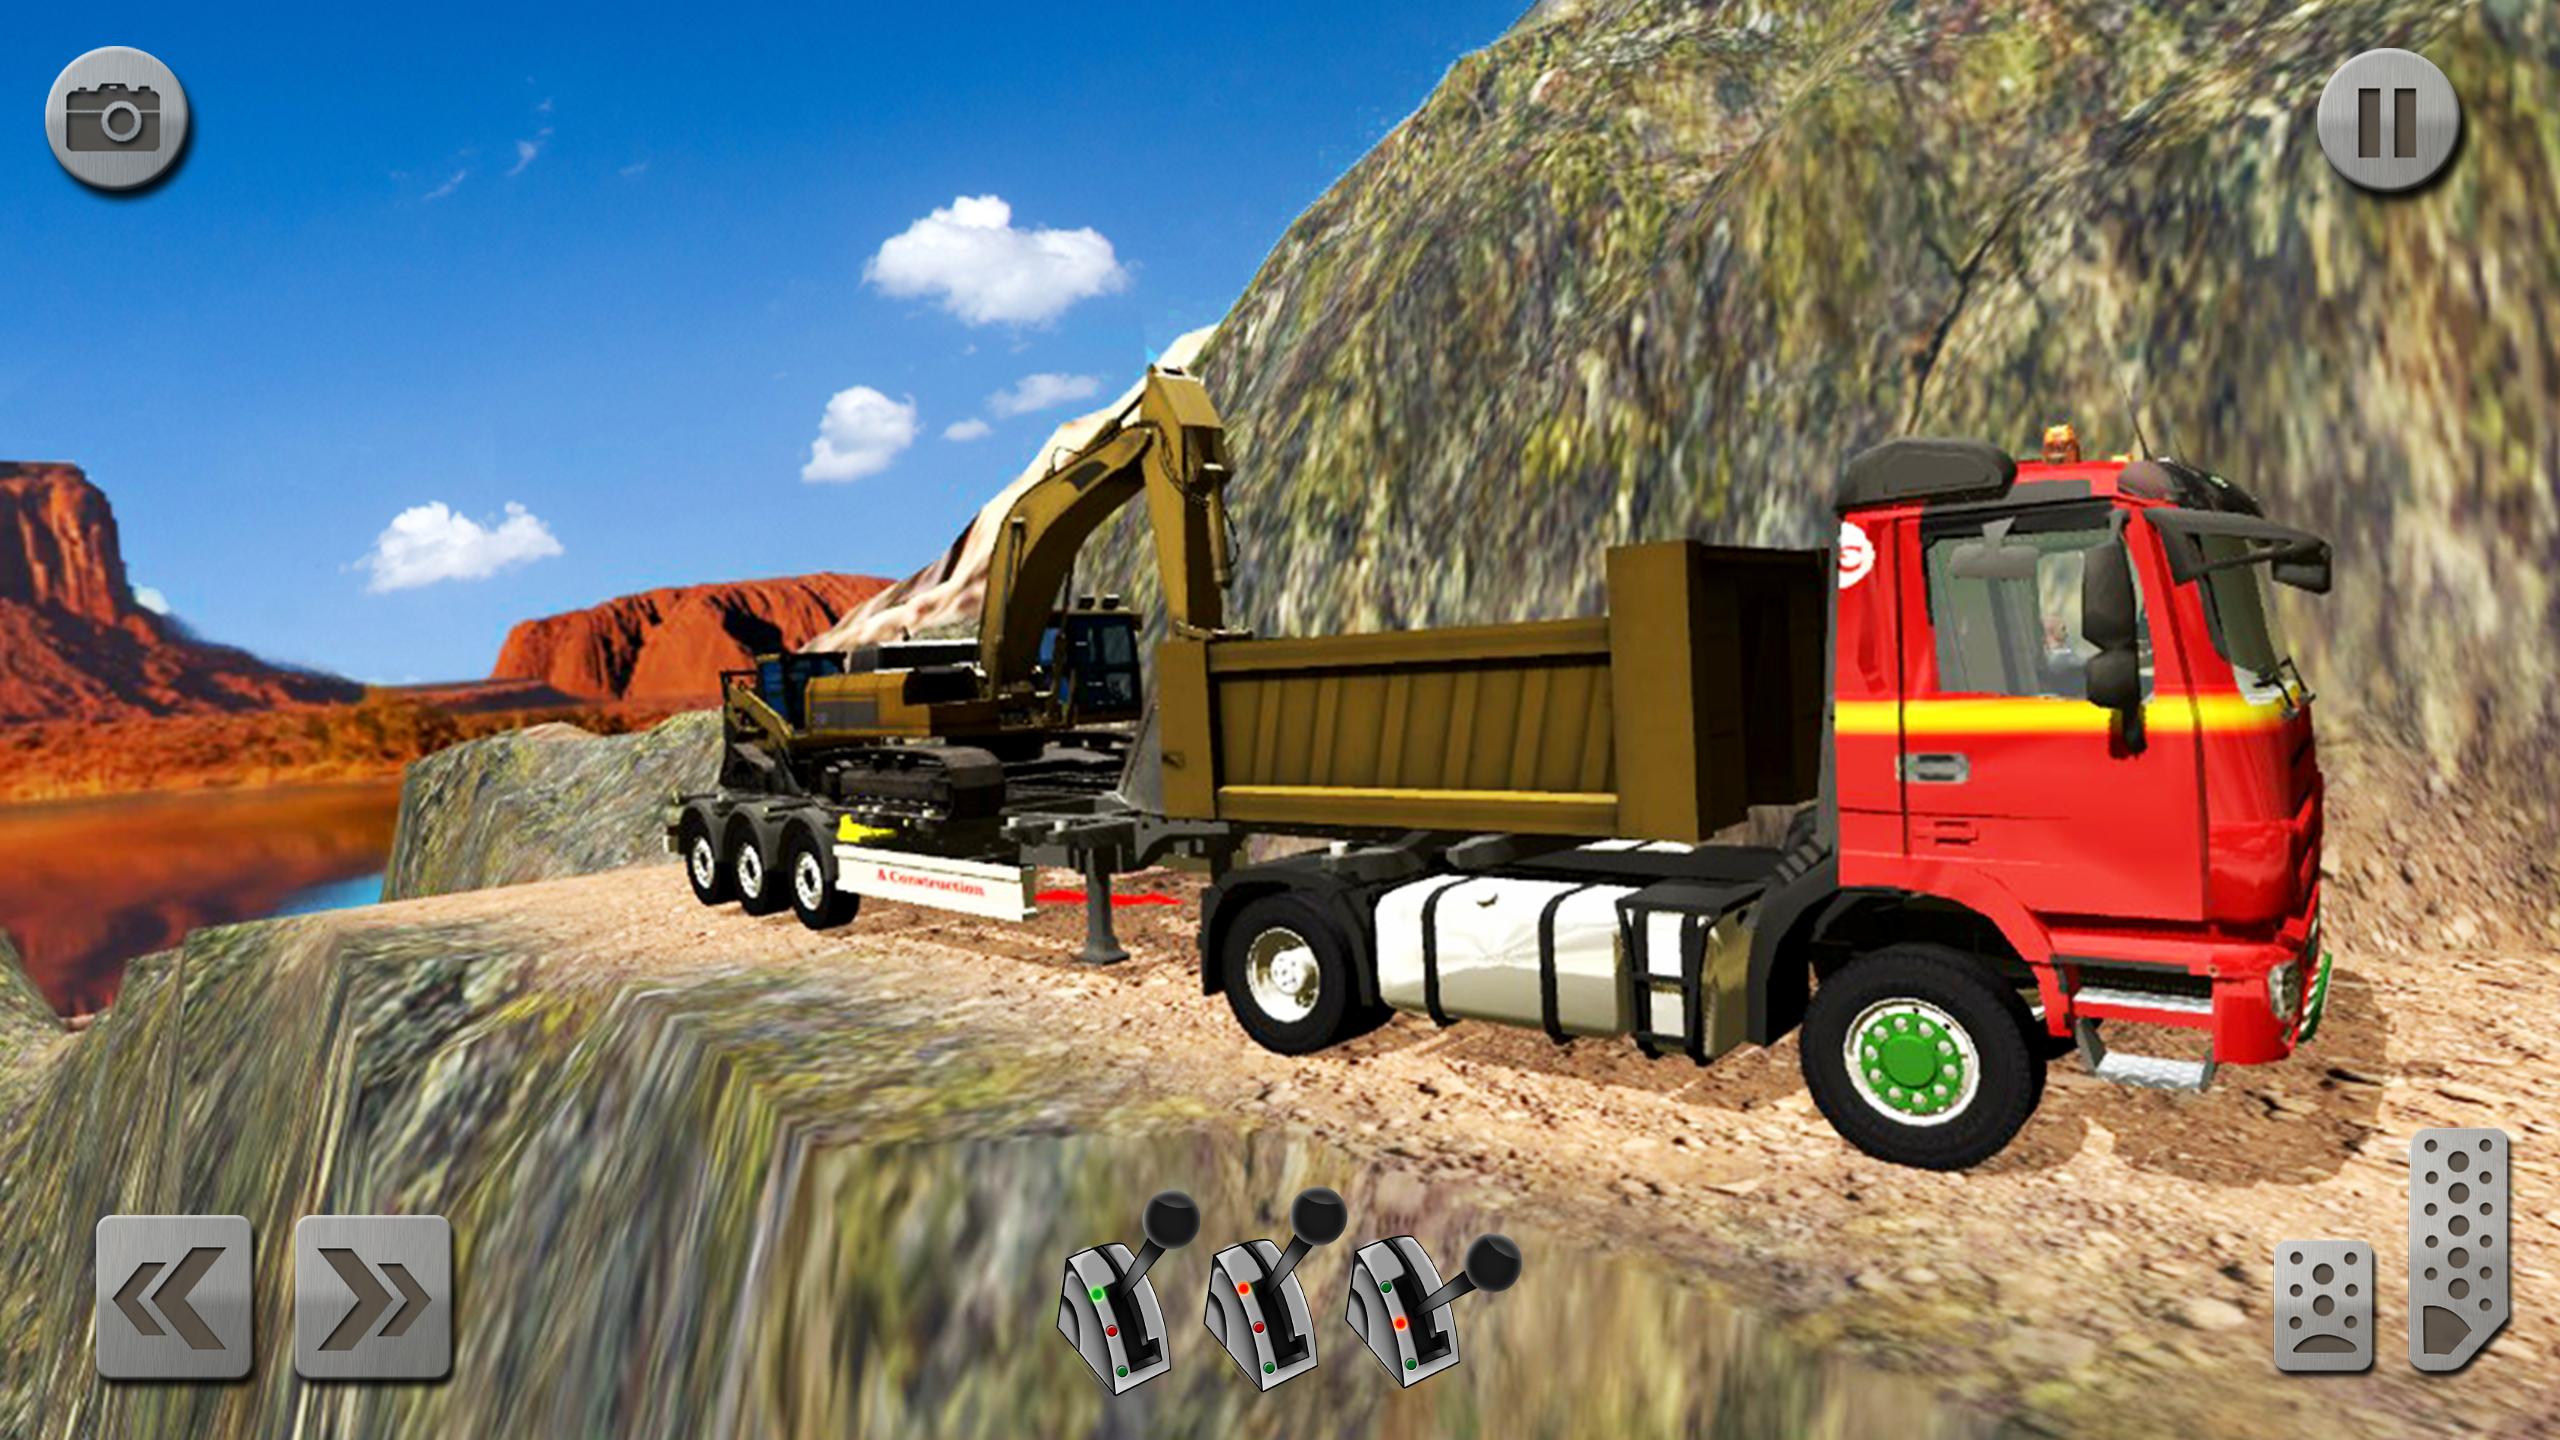 Sand Excavator Truck Driving Rescue Simulator game 5.2 Screenshot 21